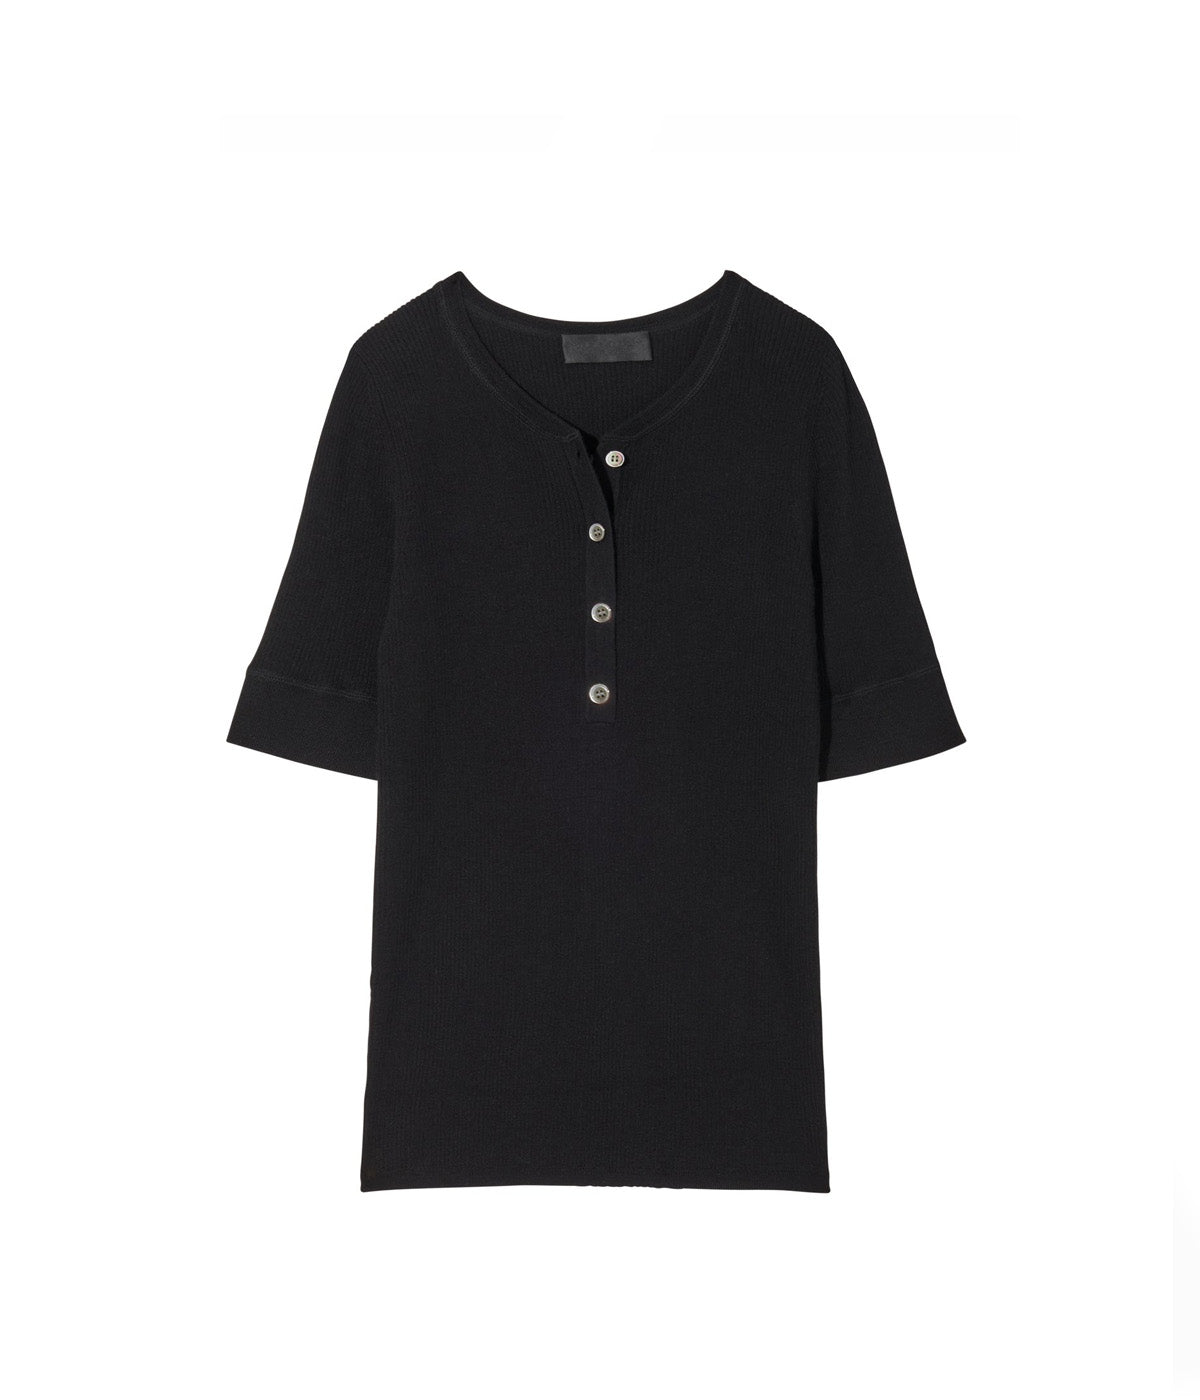 Willow Short Sleeve Henley Shirt in Black